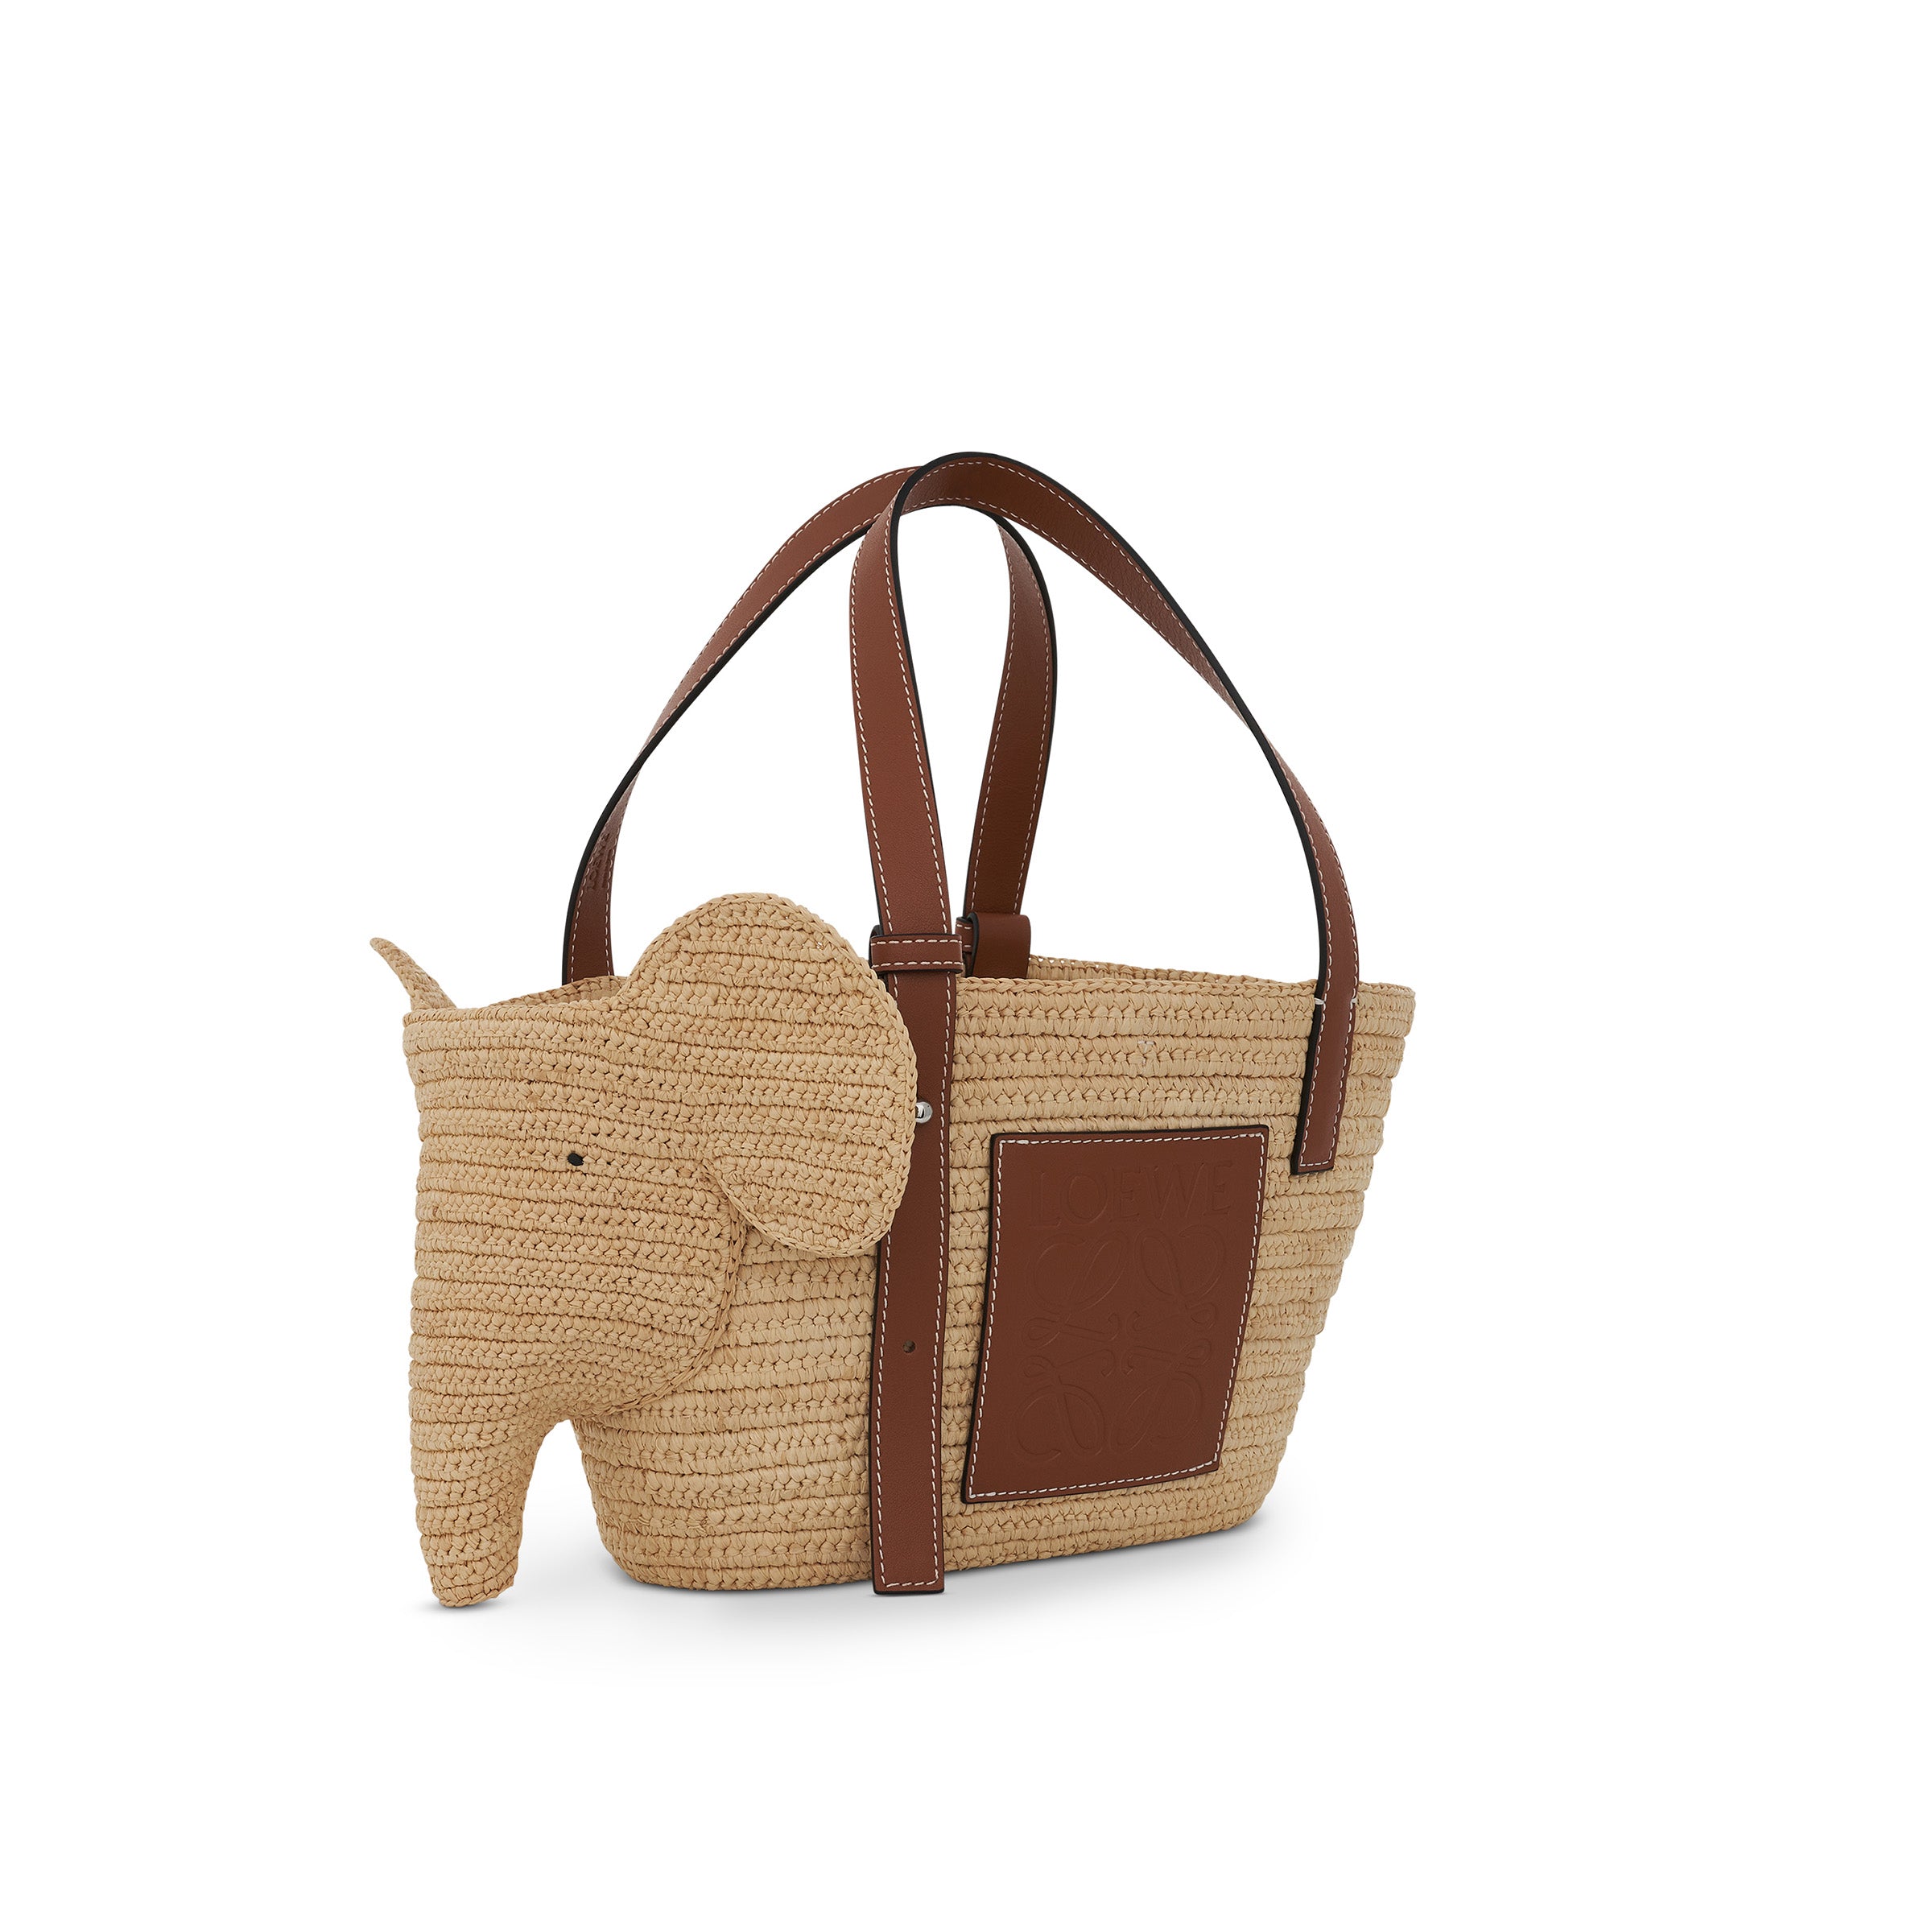 LOEWE Small Elephant Basket Bag in Raffia and Calfskin in Natural